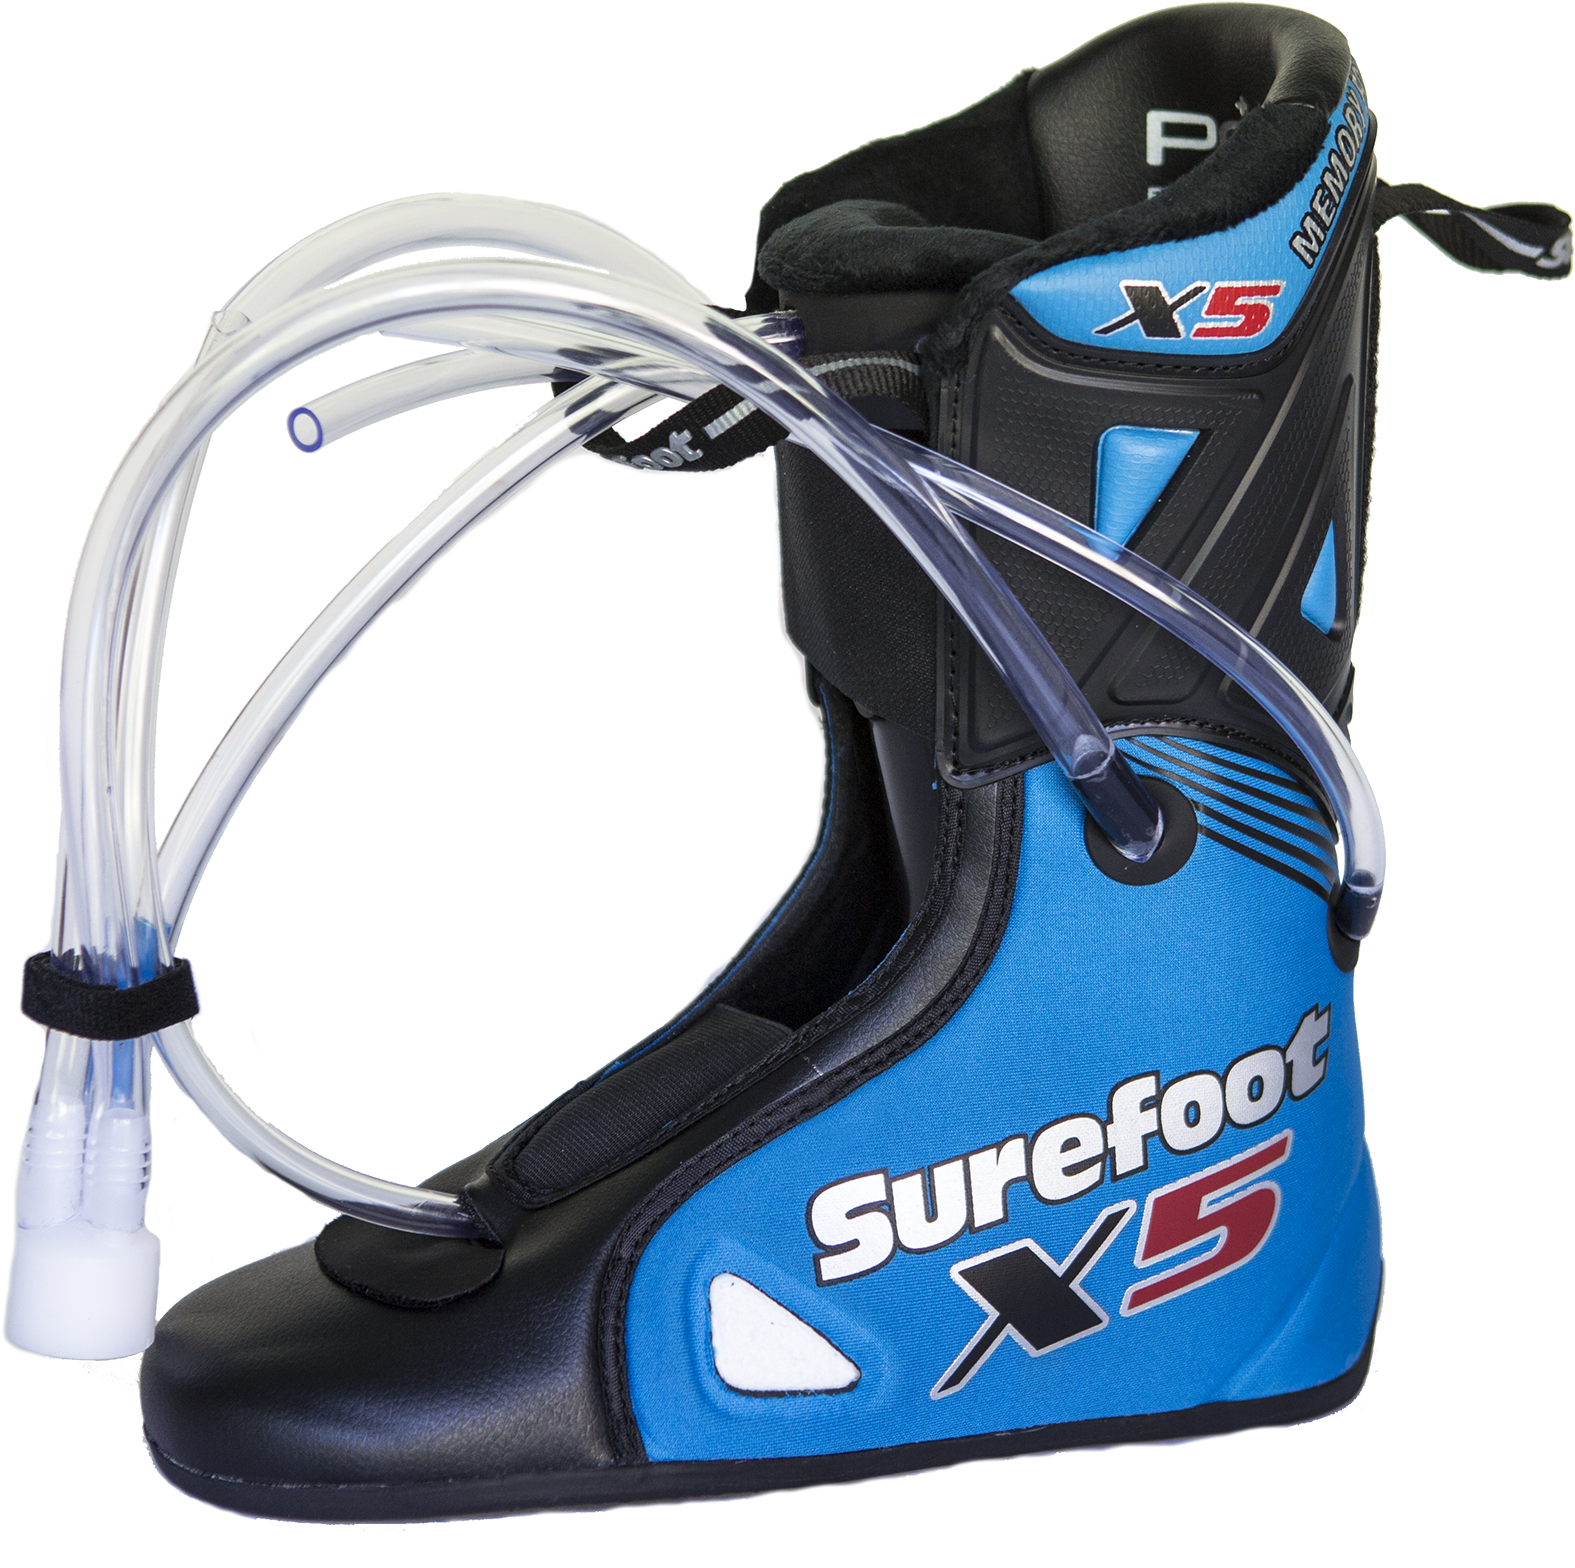 Surefoot X5 Liner - Ski Boot Liners (1747x1829), Png Download